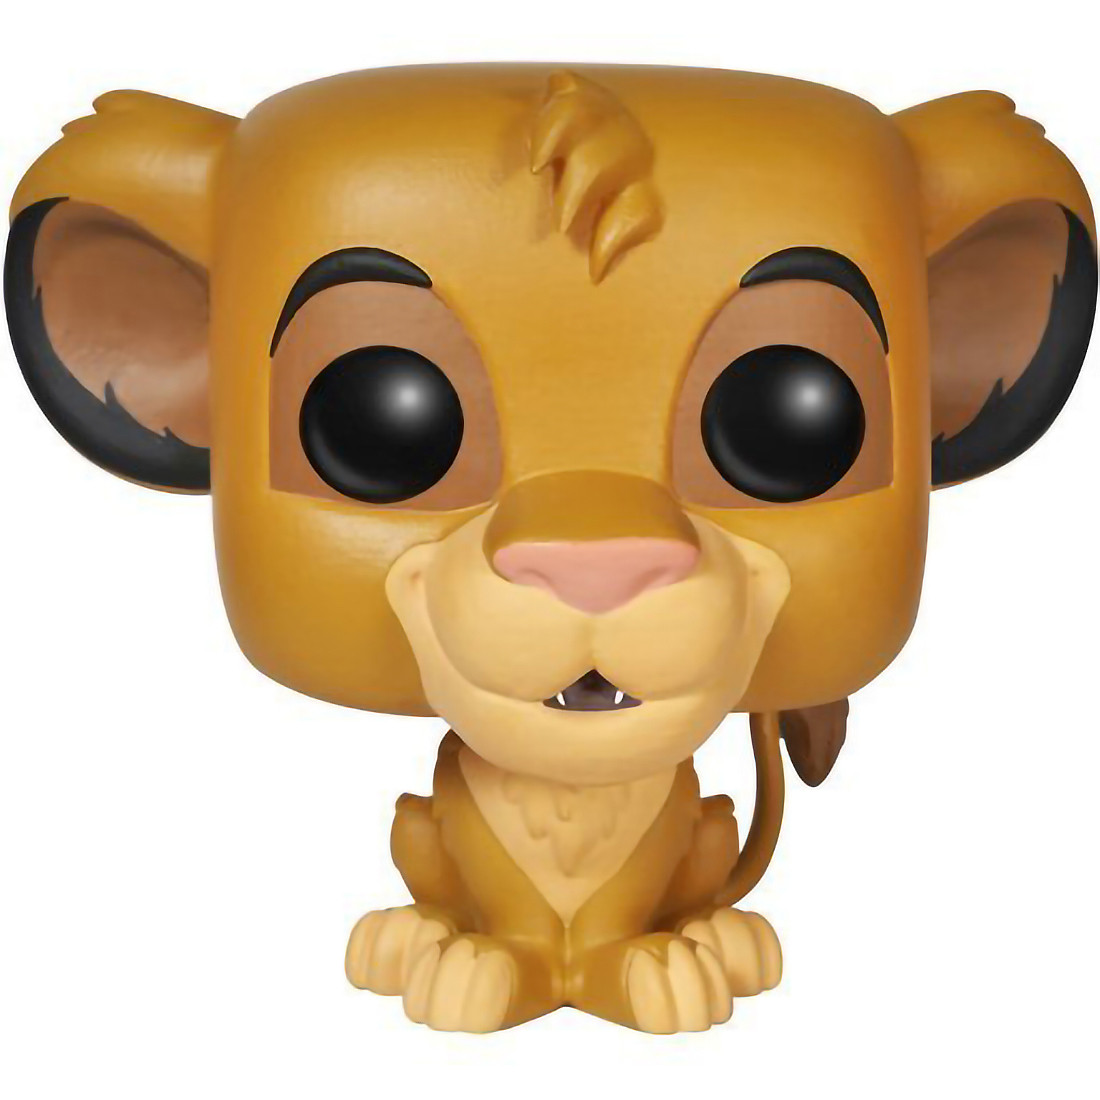 Simba: Funko POP! Disney x Lion King Vinyl Figure [#085 / 03885] - ToysDiva